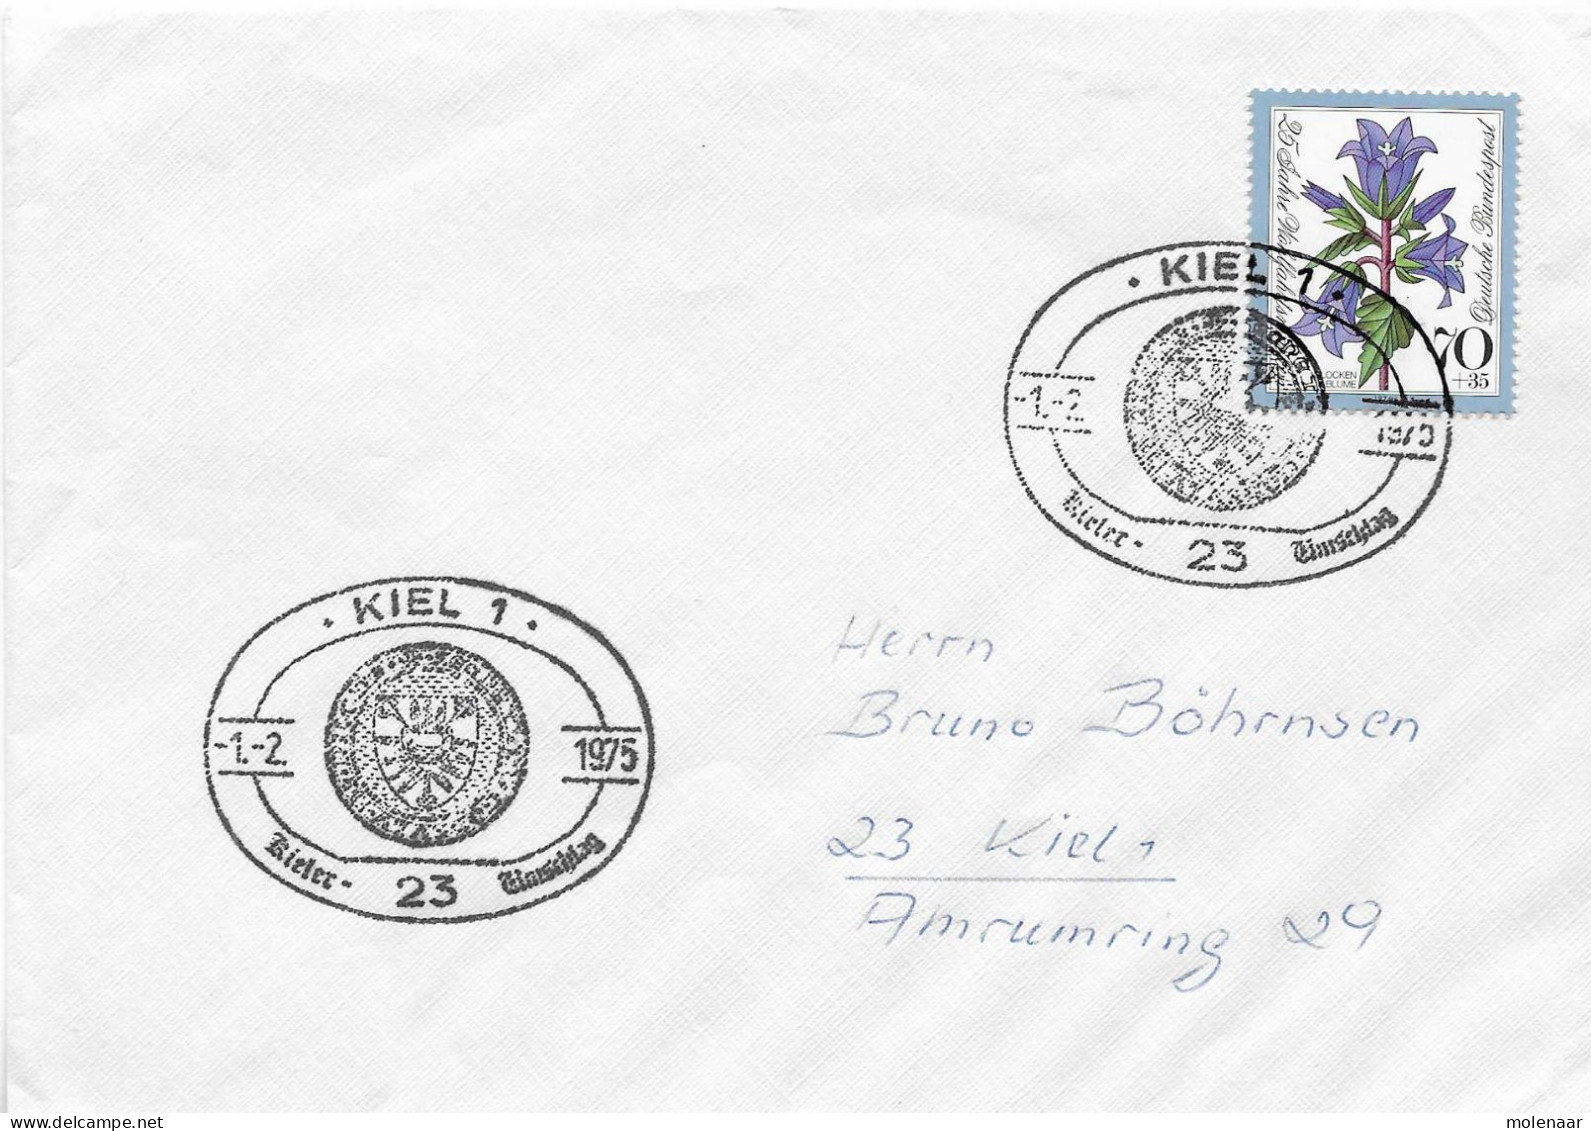 Postzegels > Europa > Duitsland > West-Duitsland > 1970-1979 > Brief Met No. 821 (17299) - Cartas & Documentos